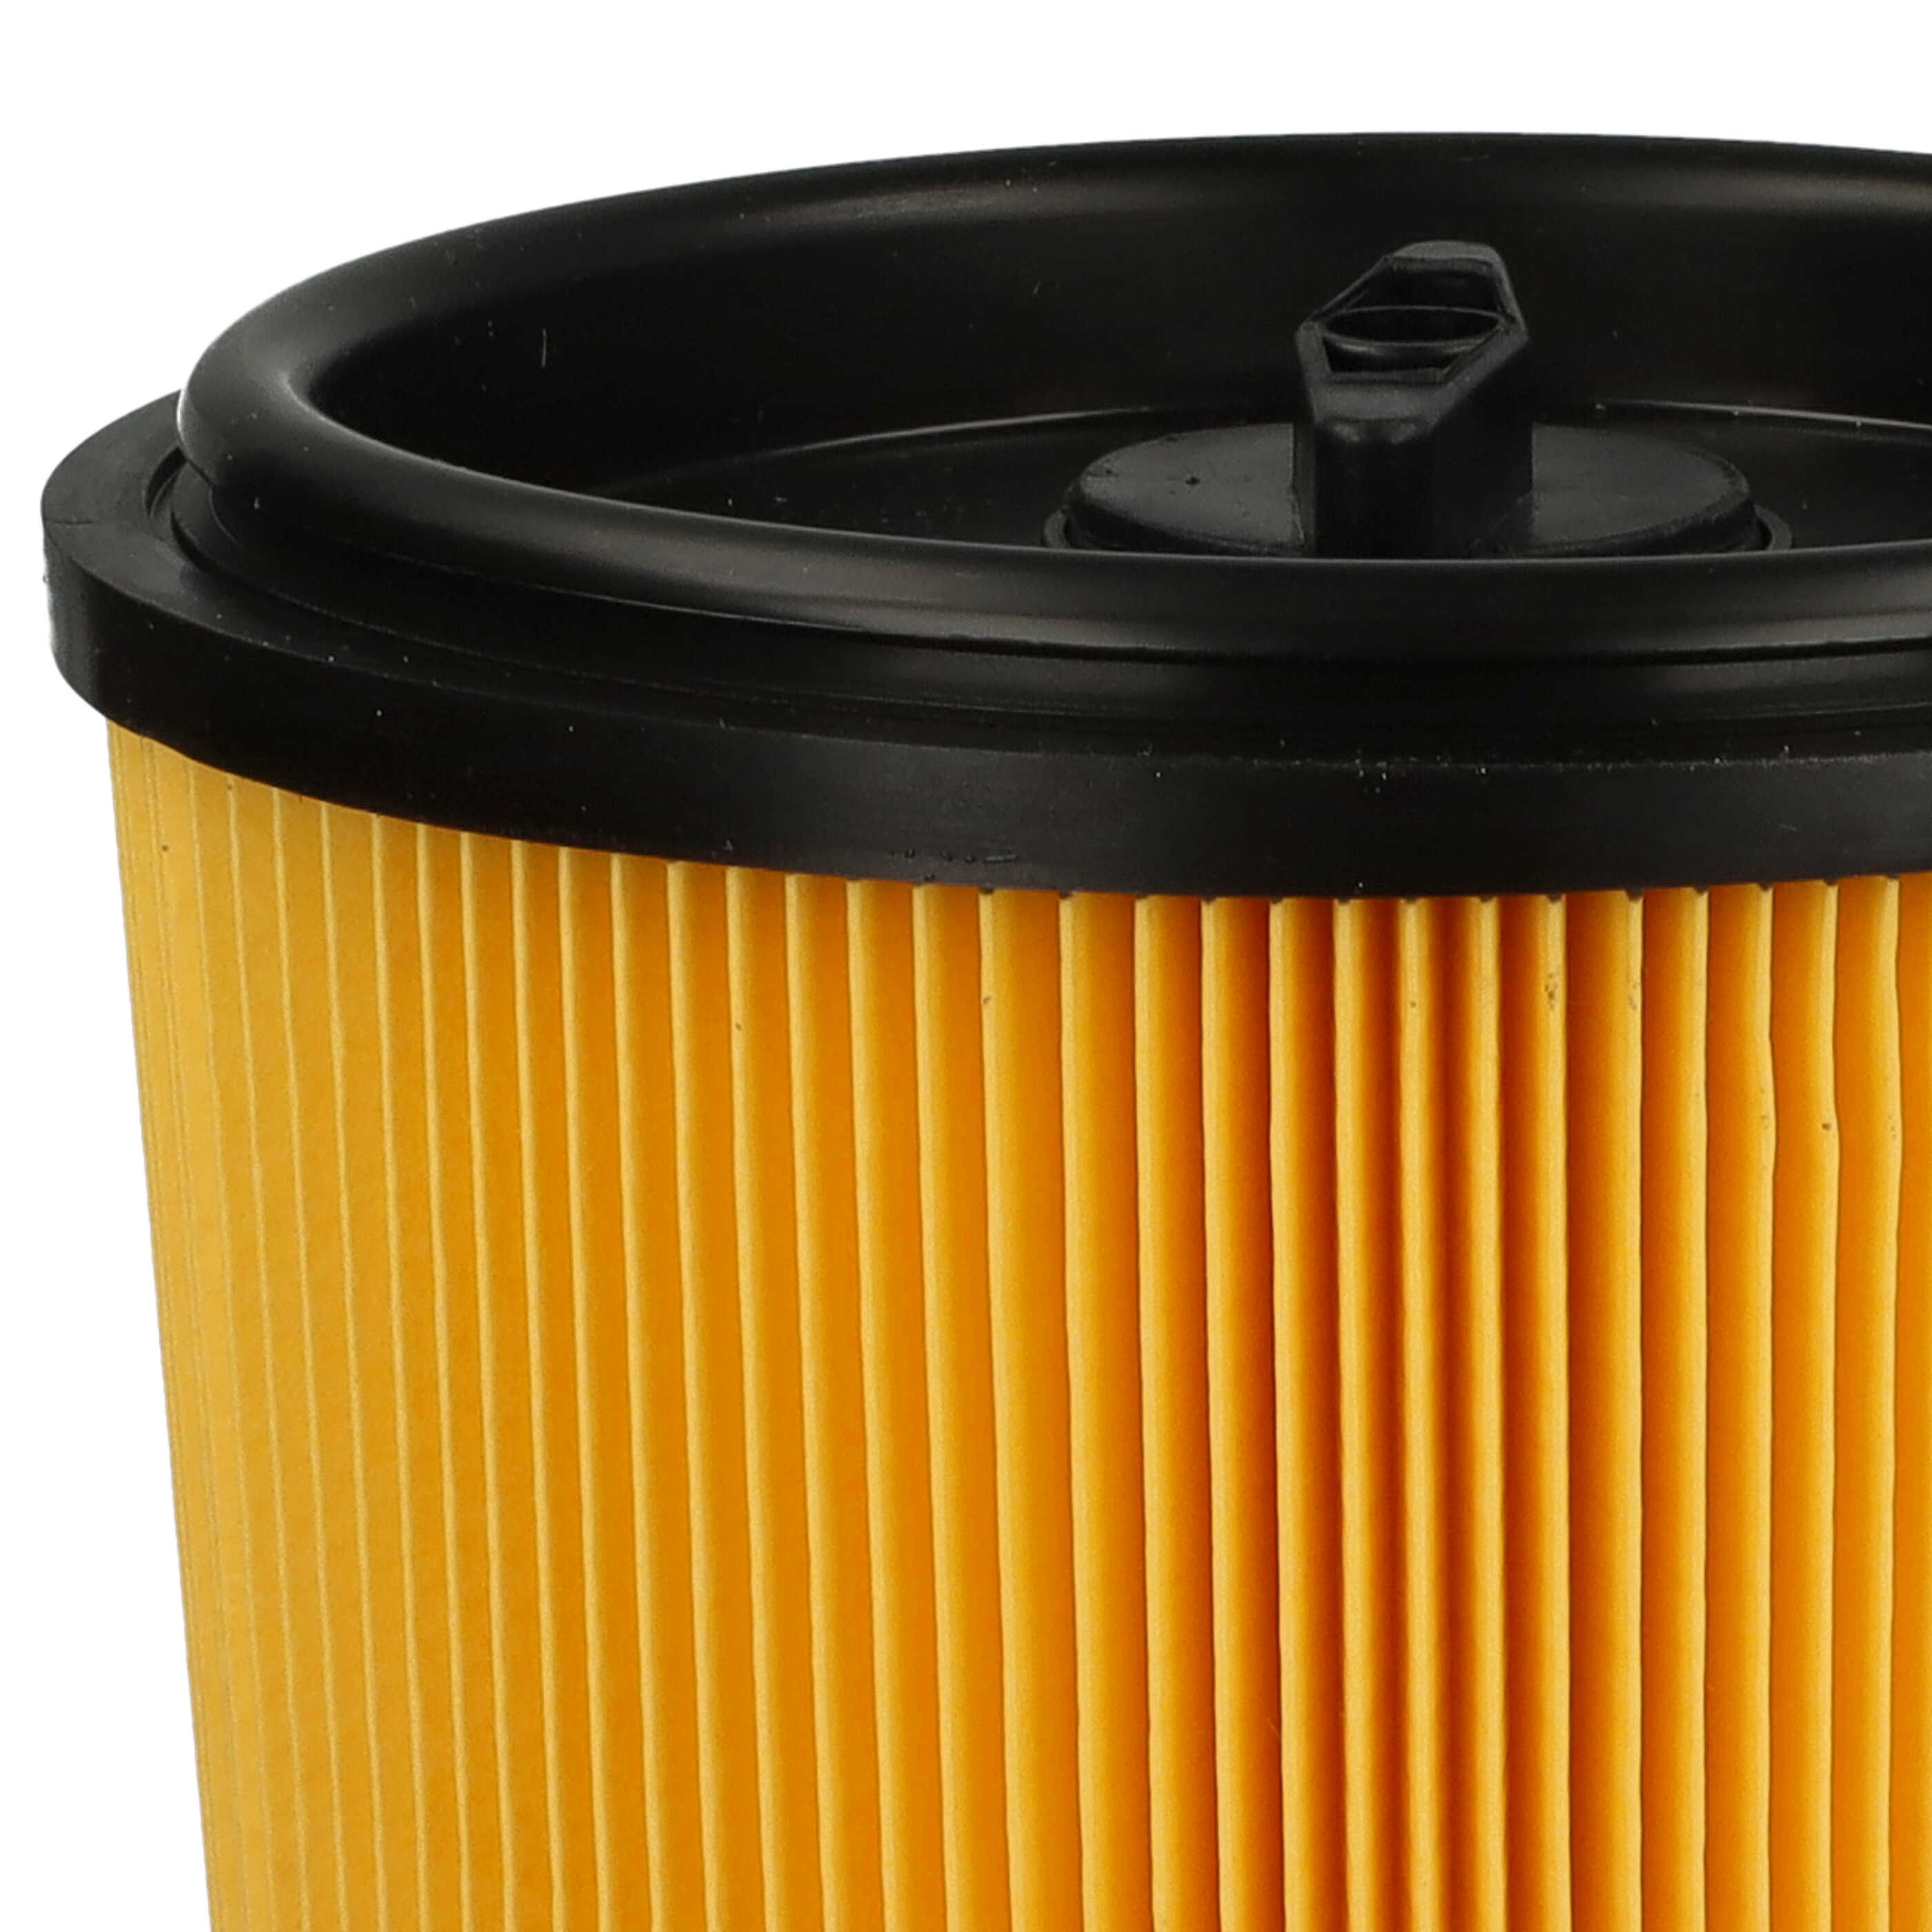 Filtro reemplaza Grizzly 91092030 para aspiradora - filtro plisado, negro / amarillo